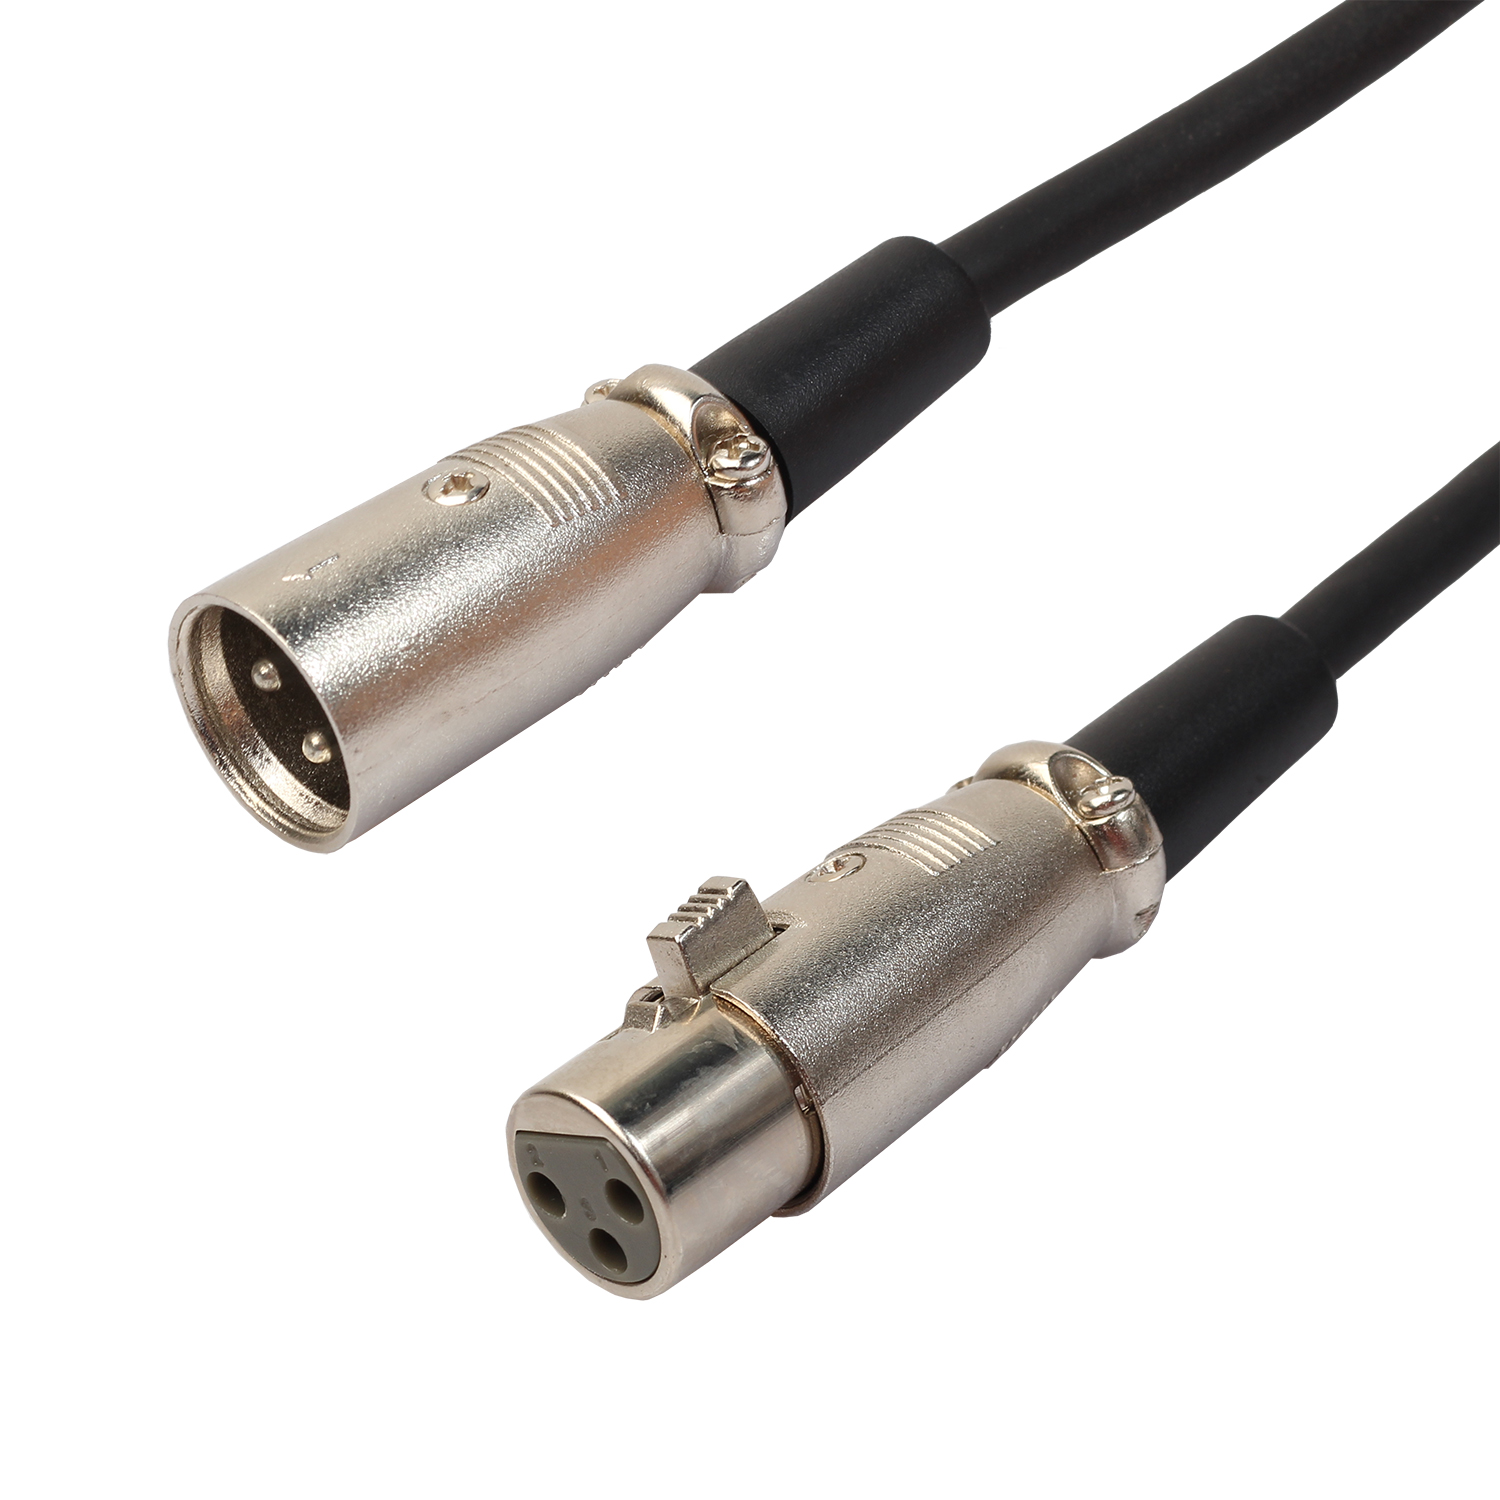 

REXLIS 1.8/ 3M 3-Pin XLR Male To XLR Female Microphone Audio Cable